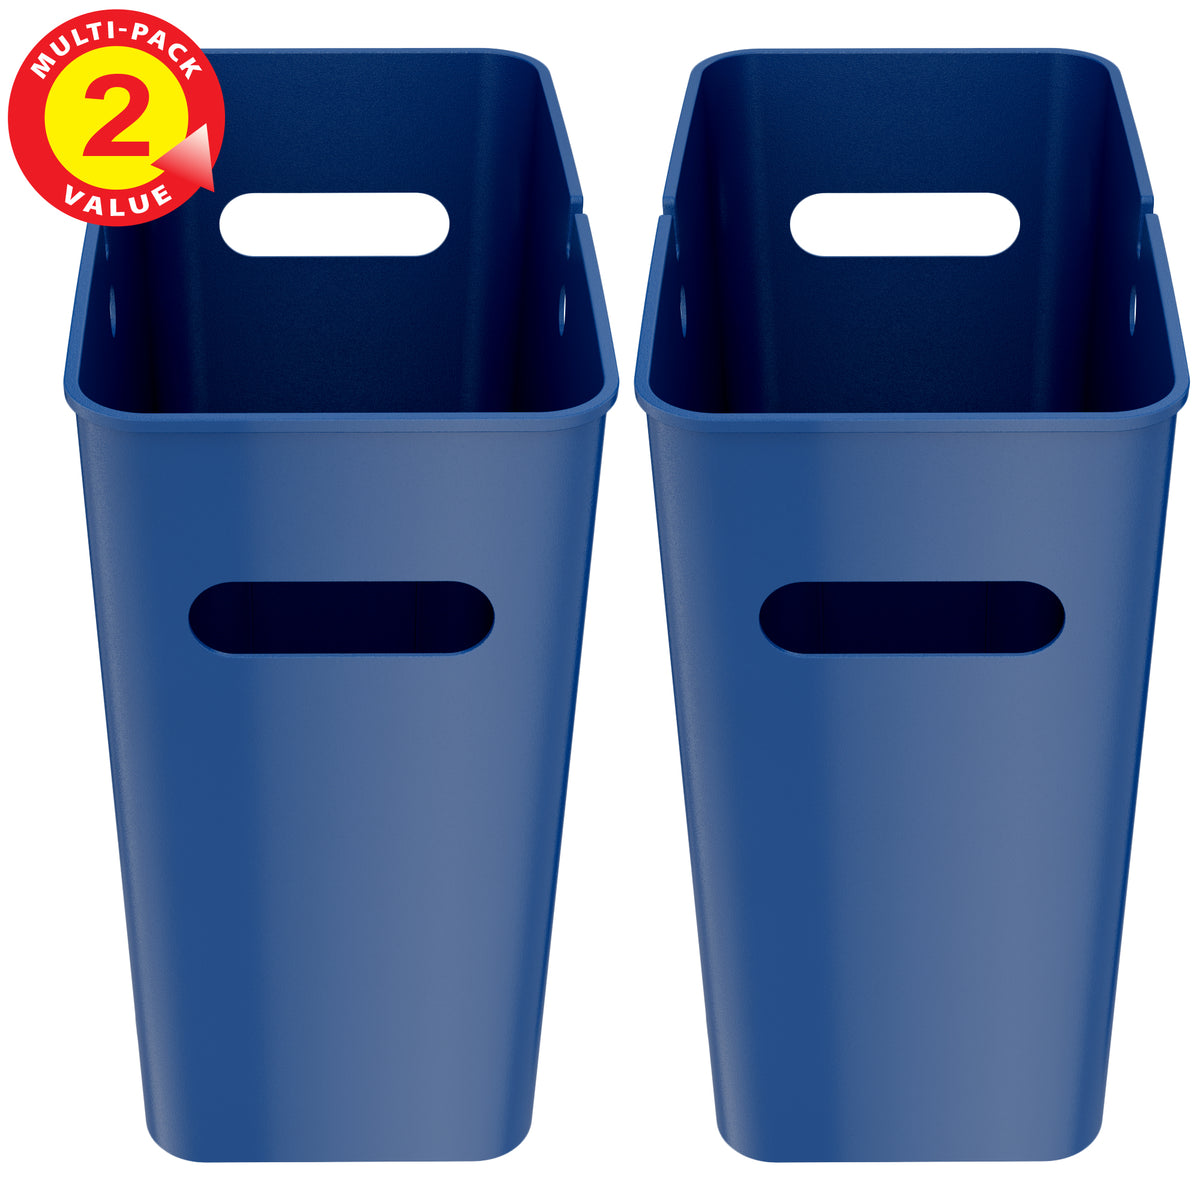 4.2 Gallon / 16 Liter SlimGiant Blue Wastebasket (2-Pack)